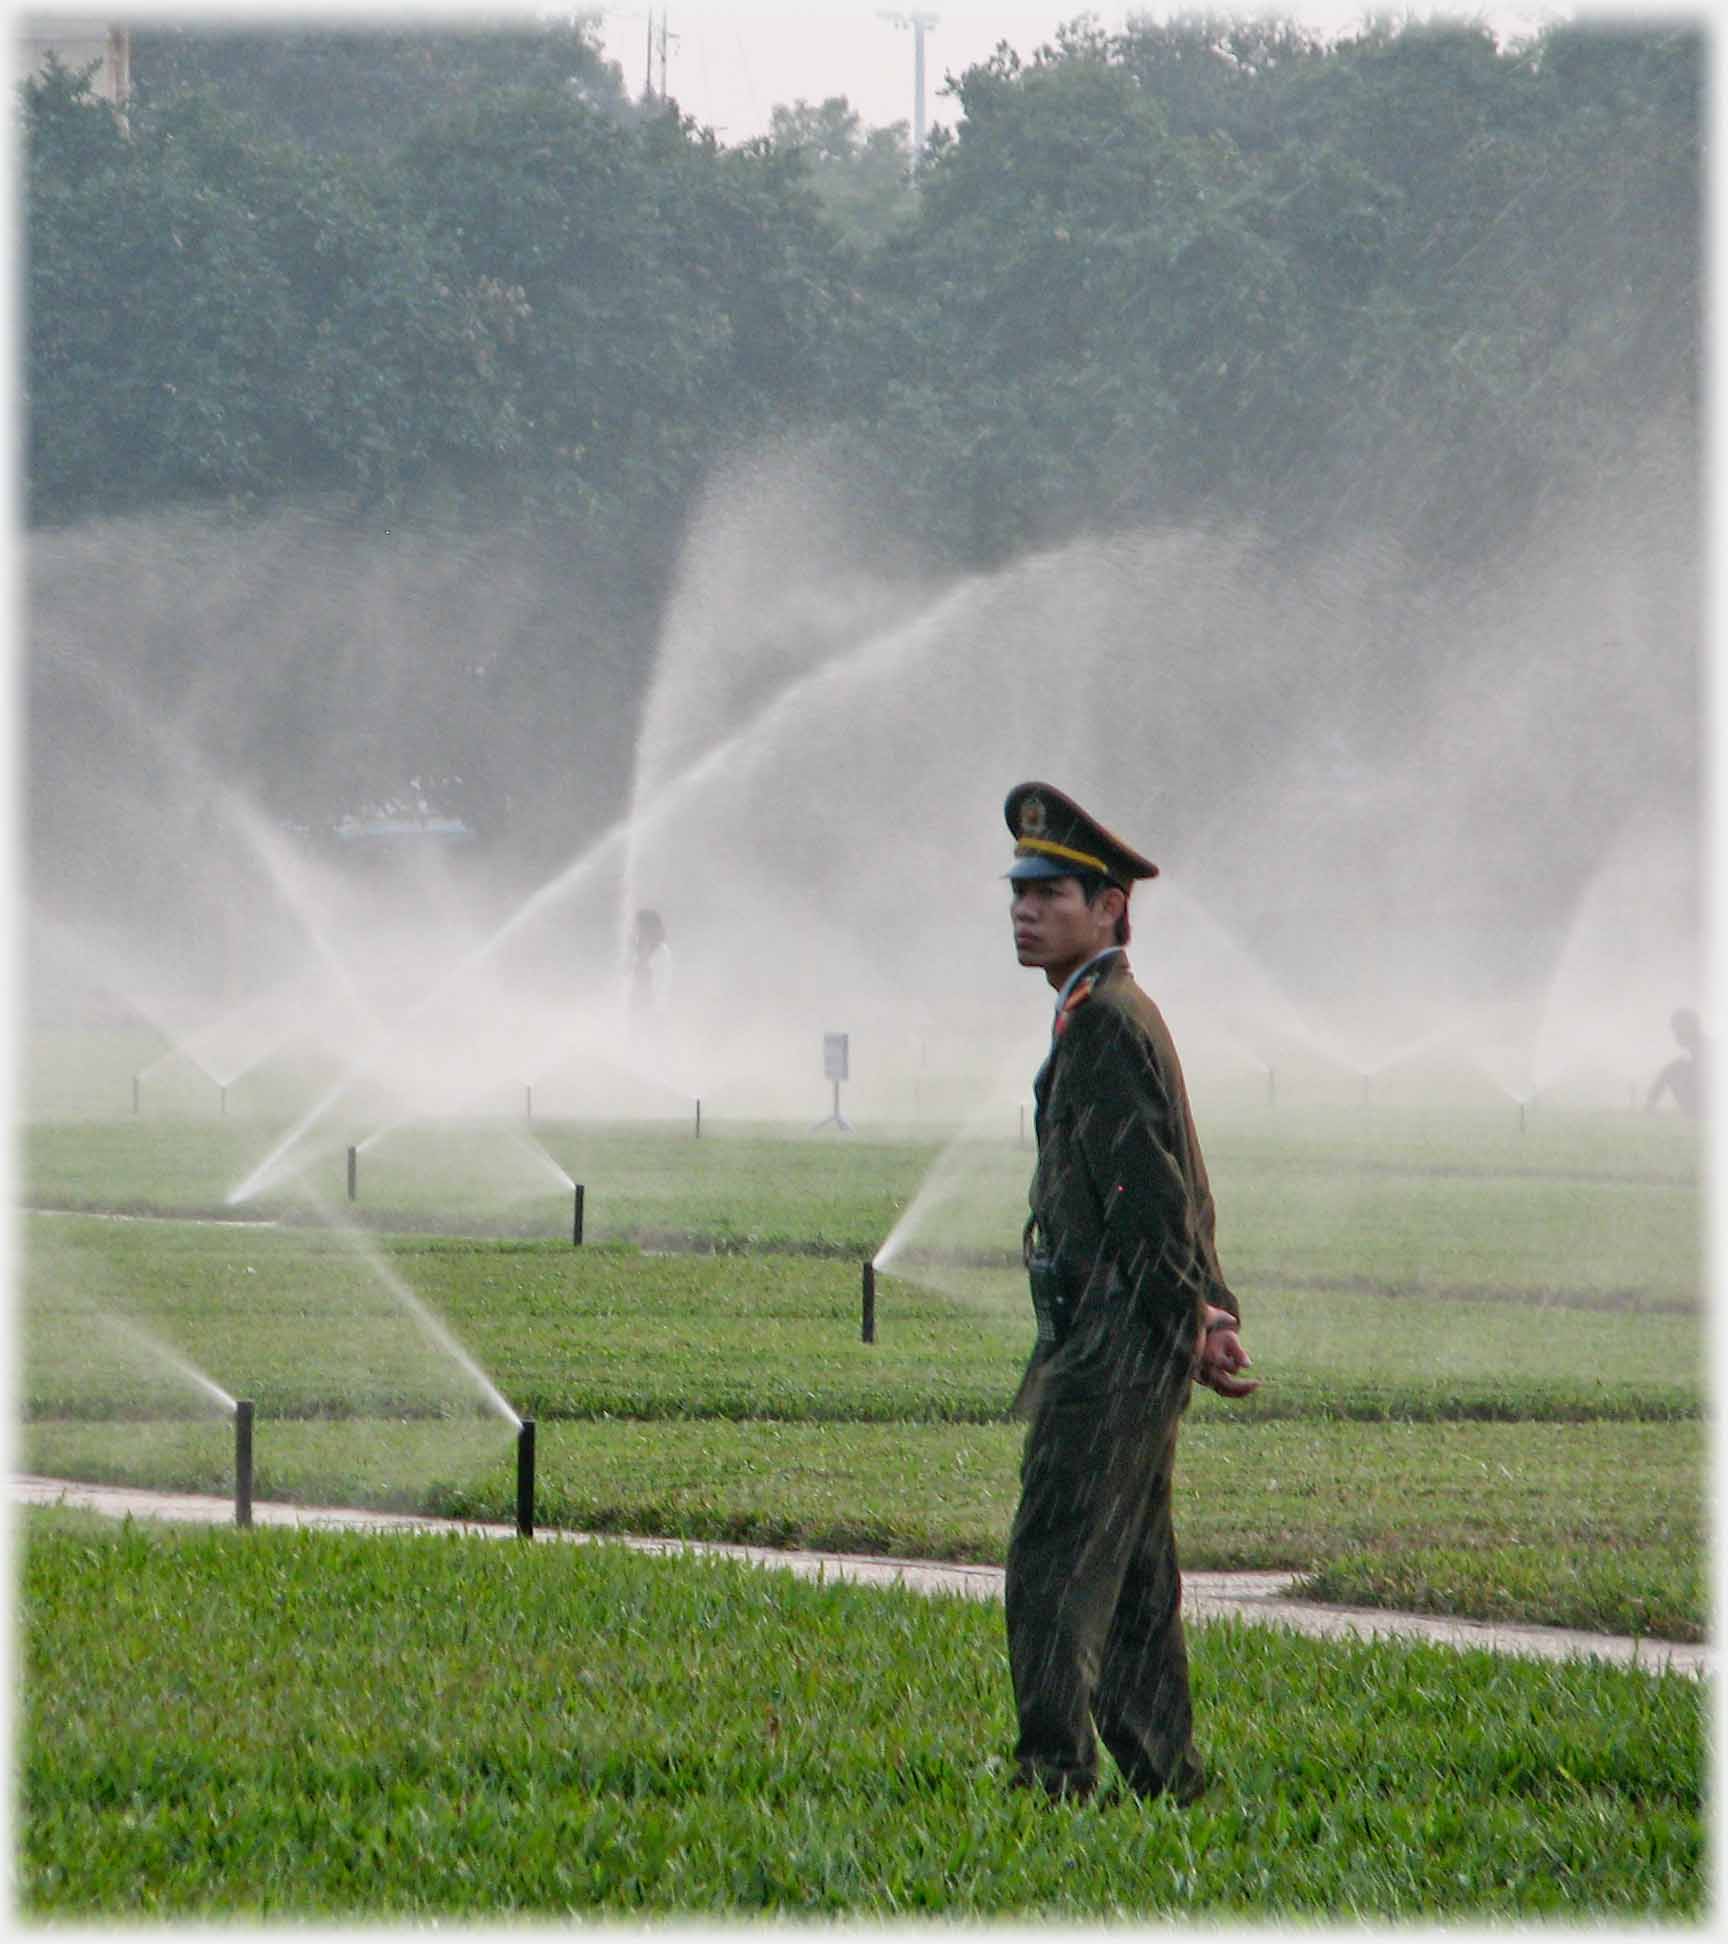 Soldier against background of sprinklers, spay over him.